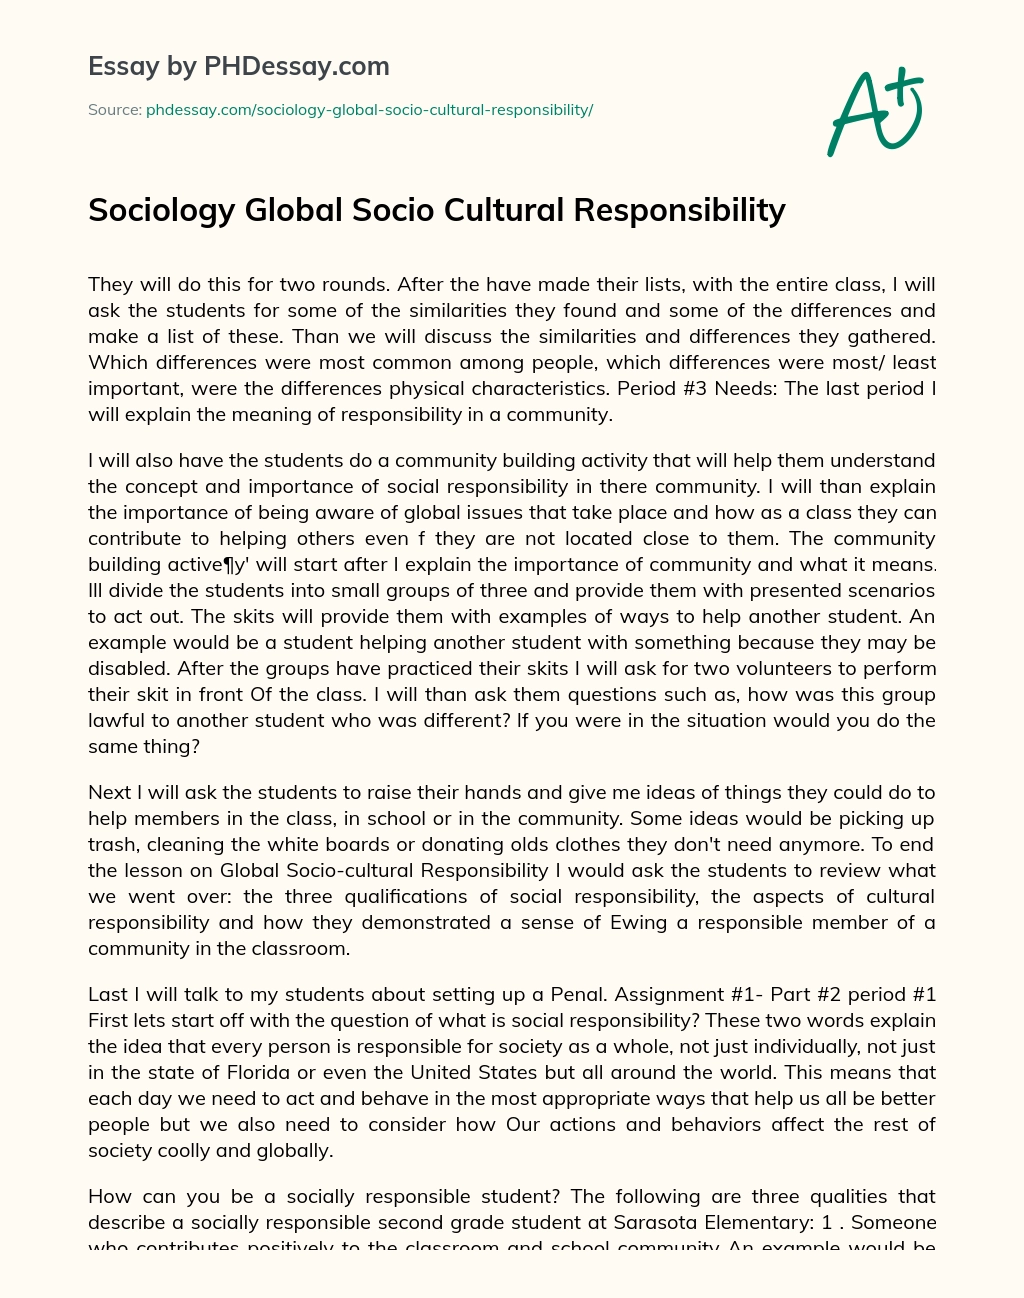 Sociology Global Socio Cultural Responsibility essay